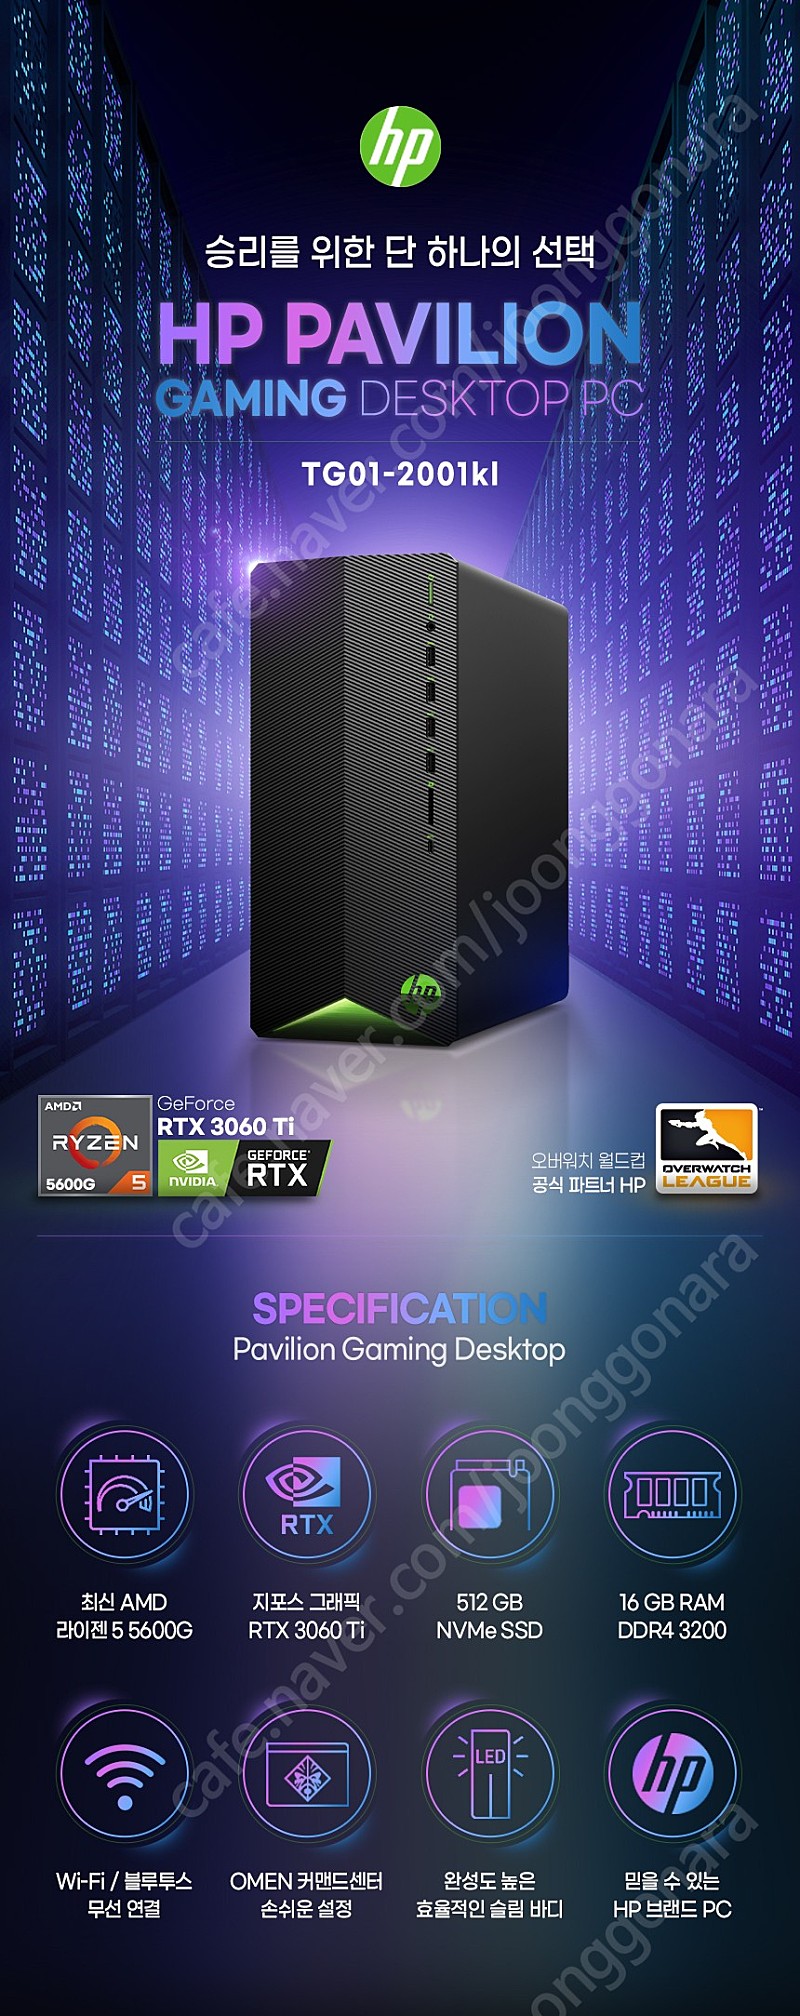 HP TG01-2001KL (윈도우10프로포함)PC 본체 그래픽카드 적출 제품 박스 개봉 판매합니다.